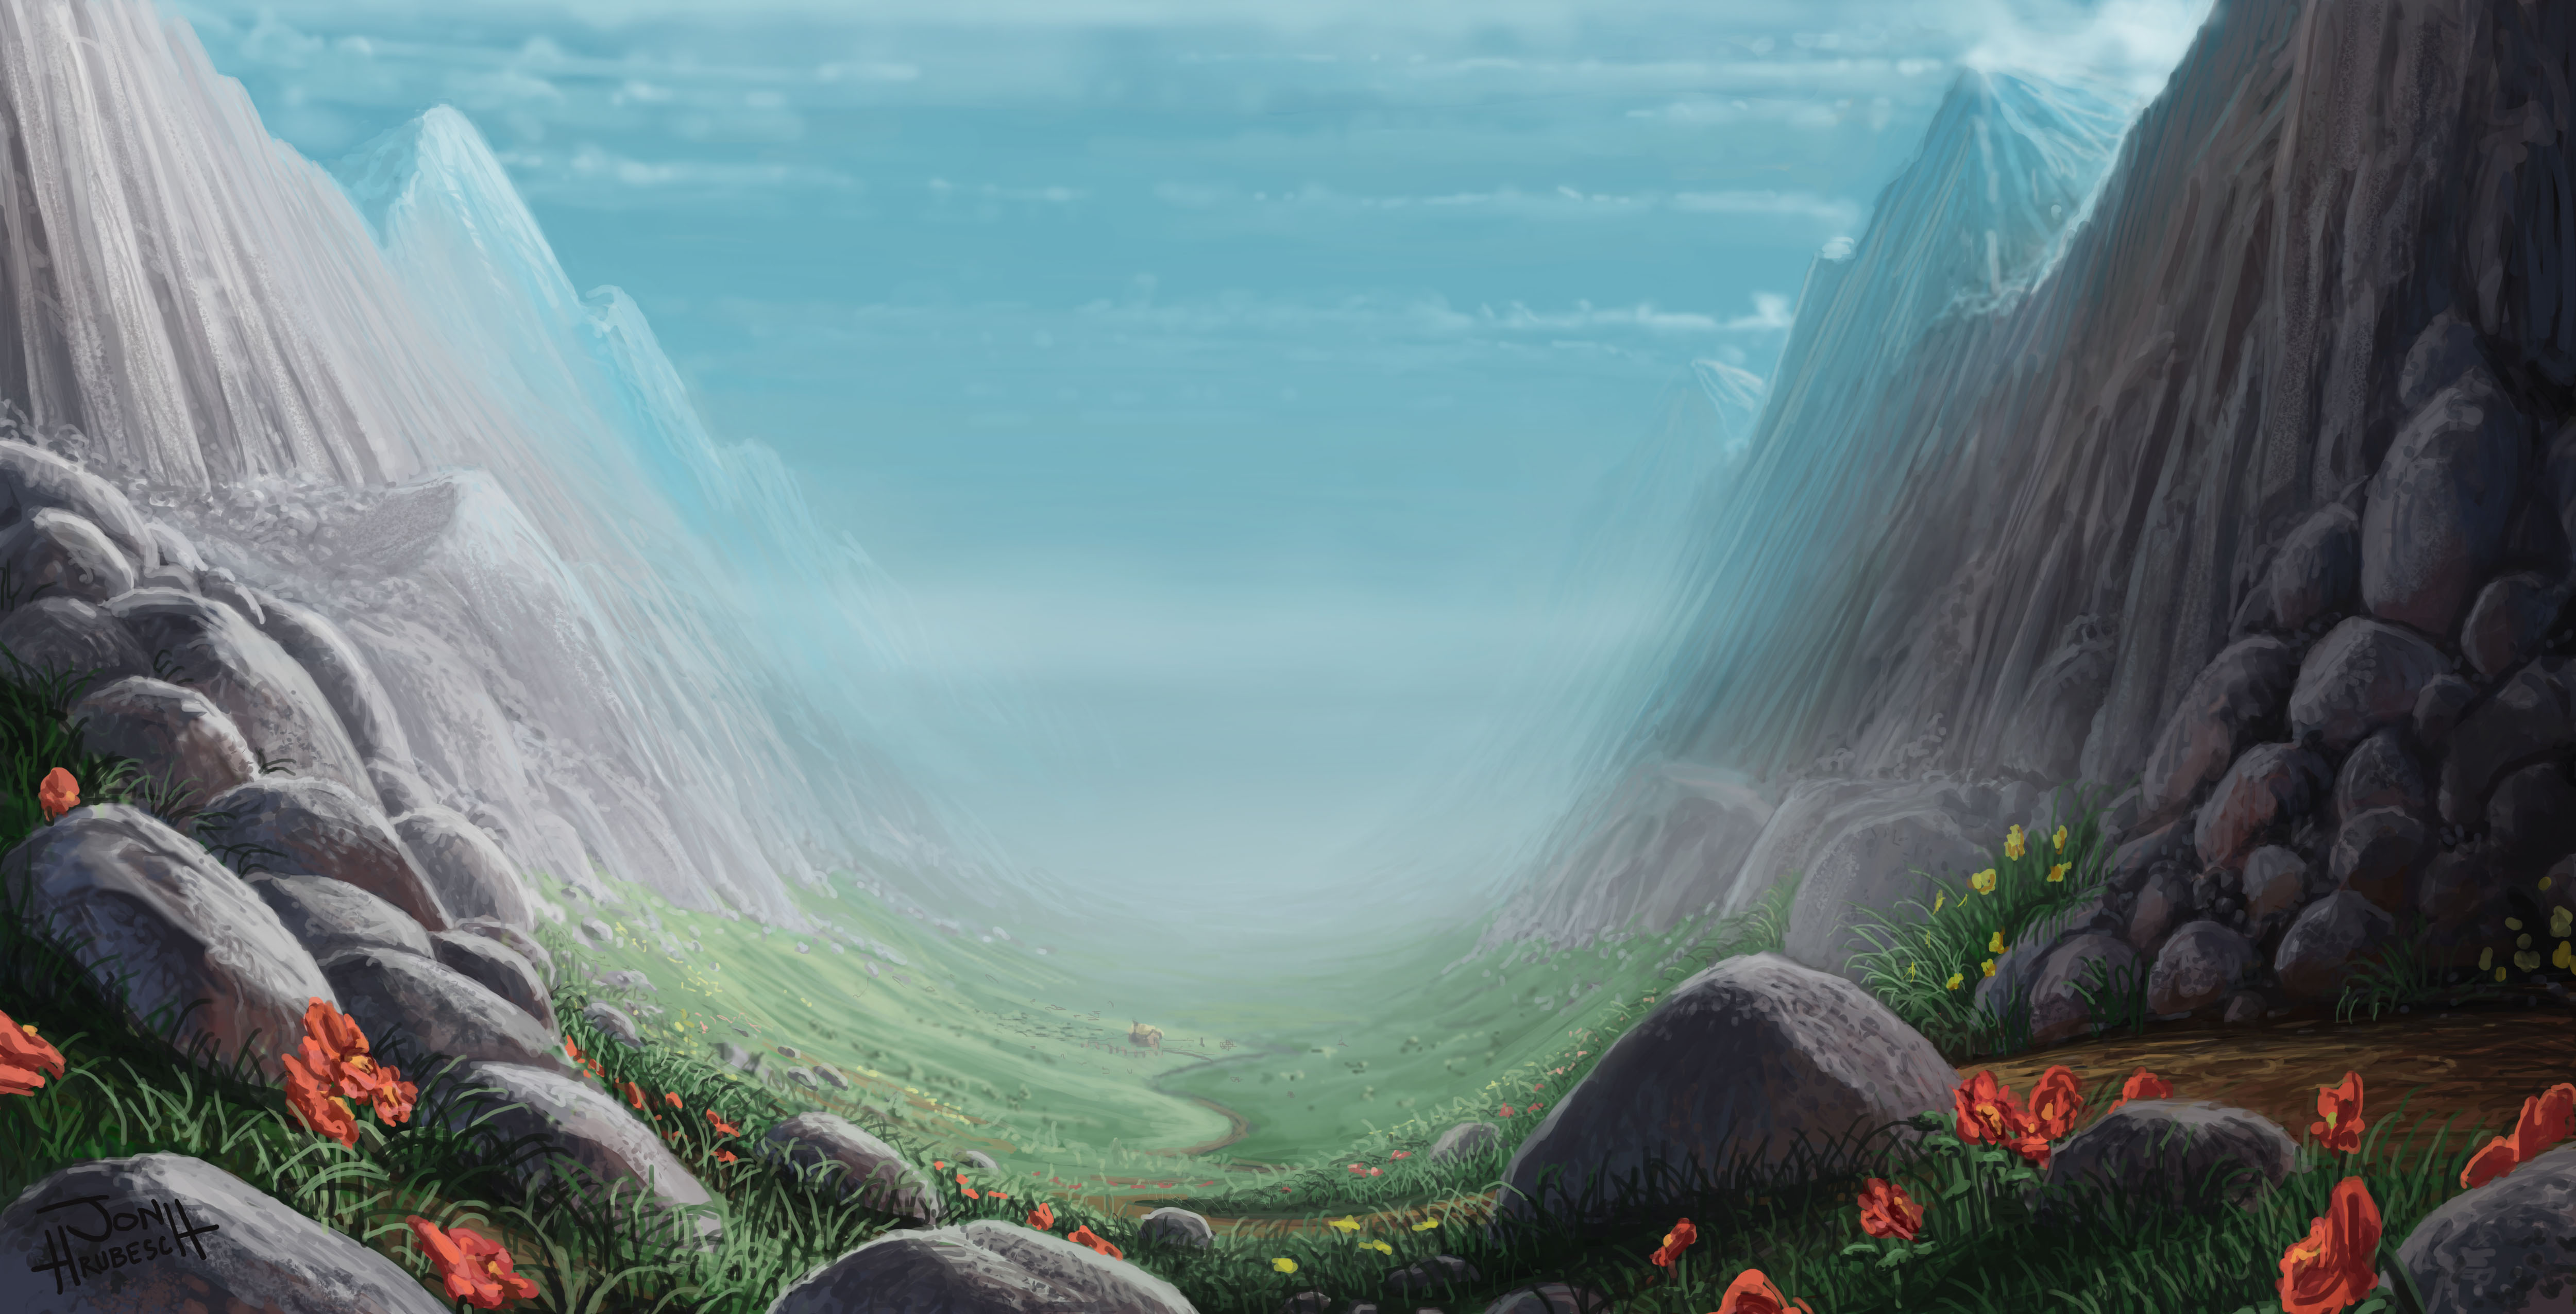 Fantasy Landscape 4k Ultra HD Wallpaper | Background Image | 5000x2550